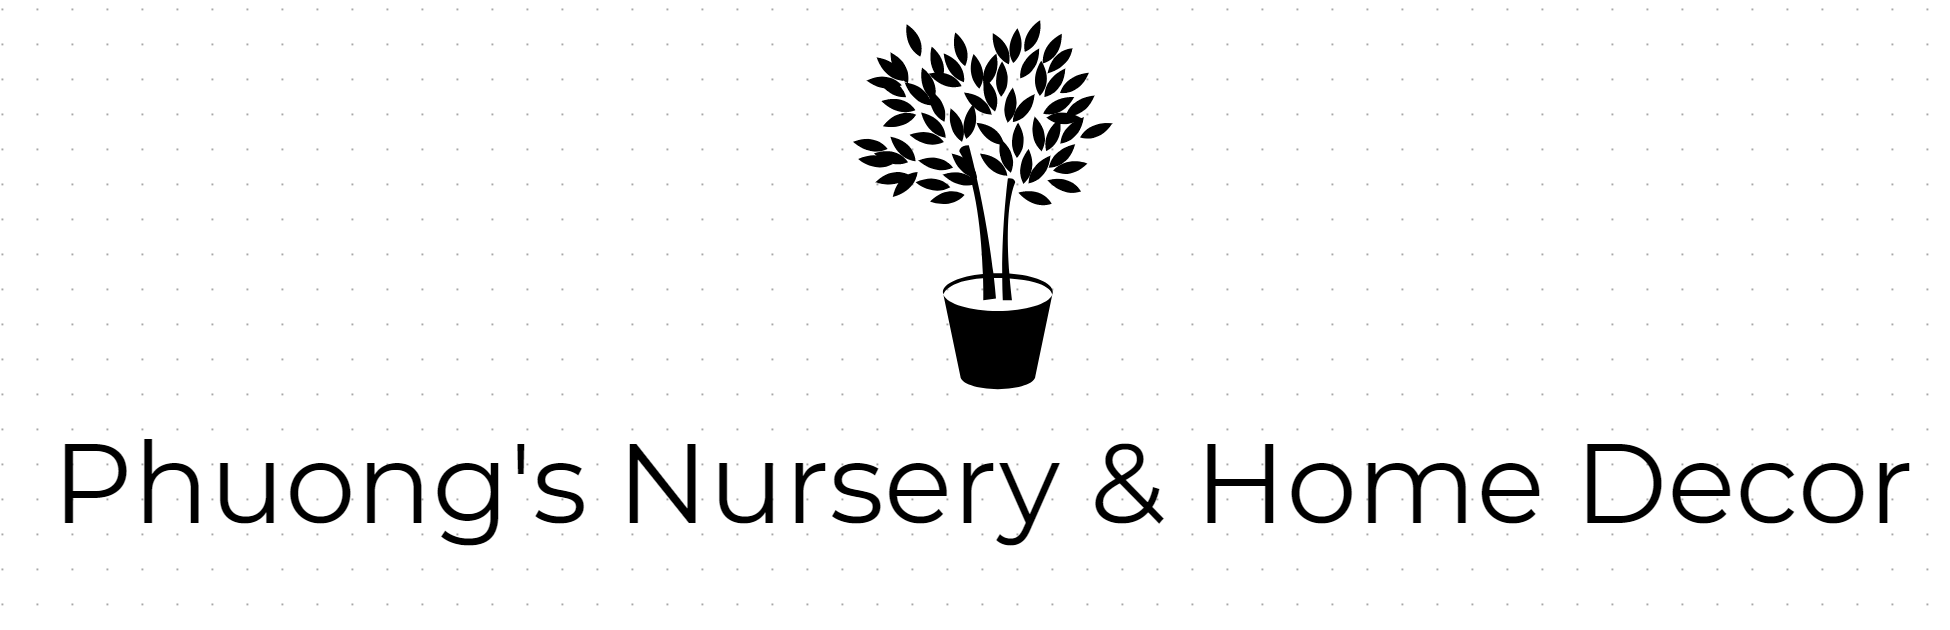 Phuong's Nursery & Home Decor